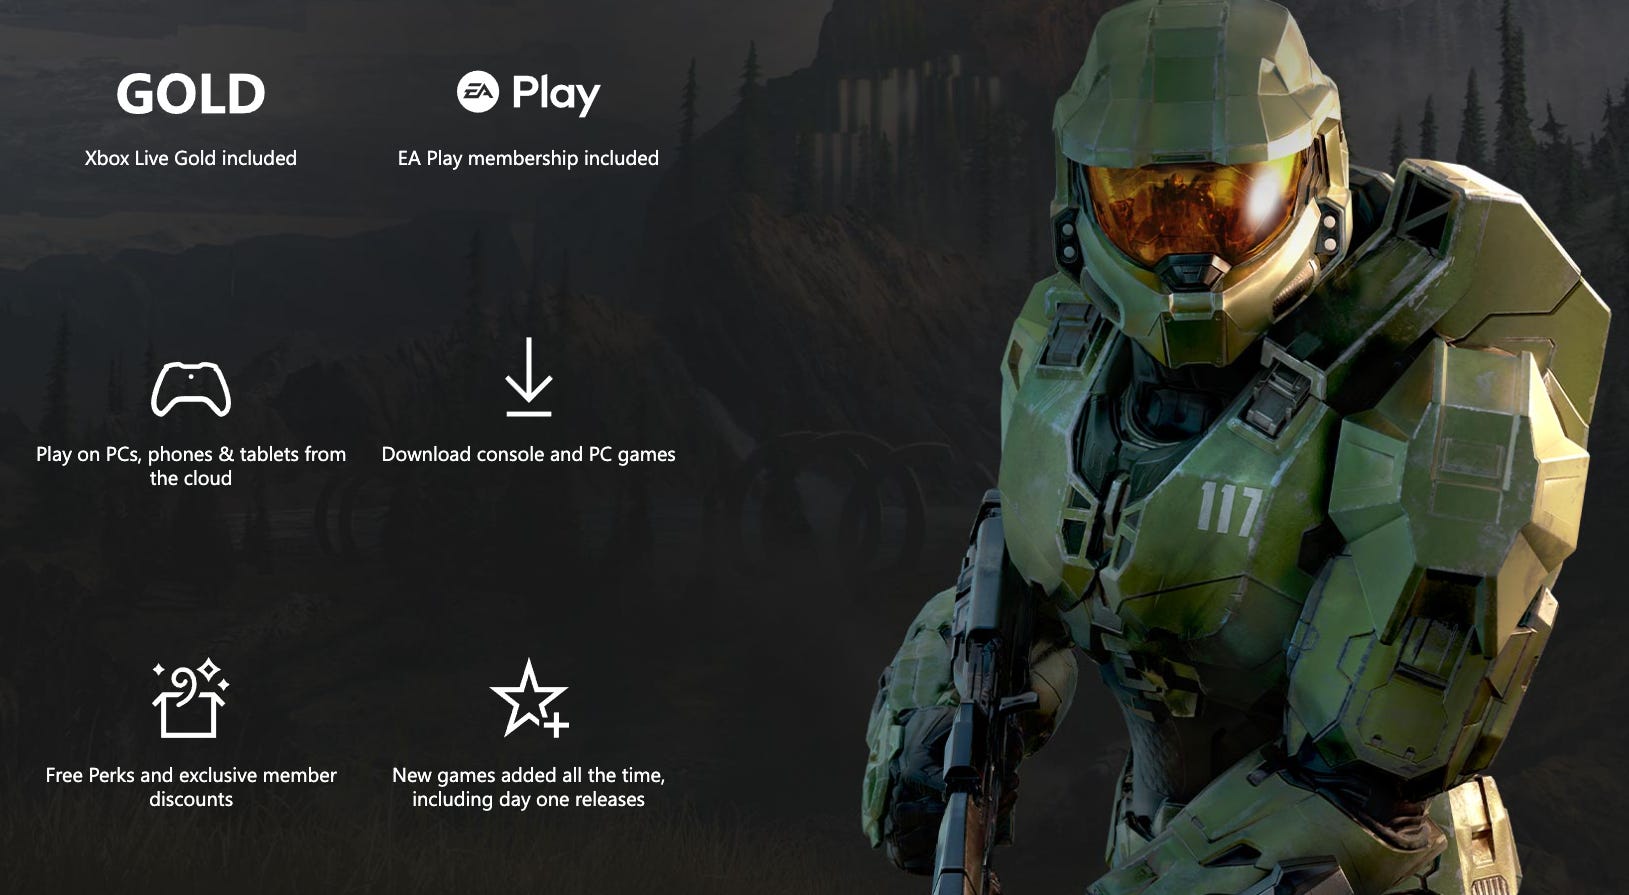 Microsoft won't immediately raise Xbox Game Pass price if